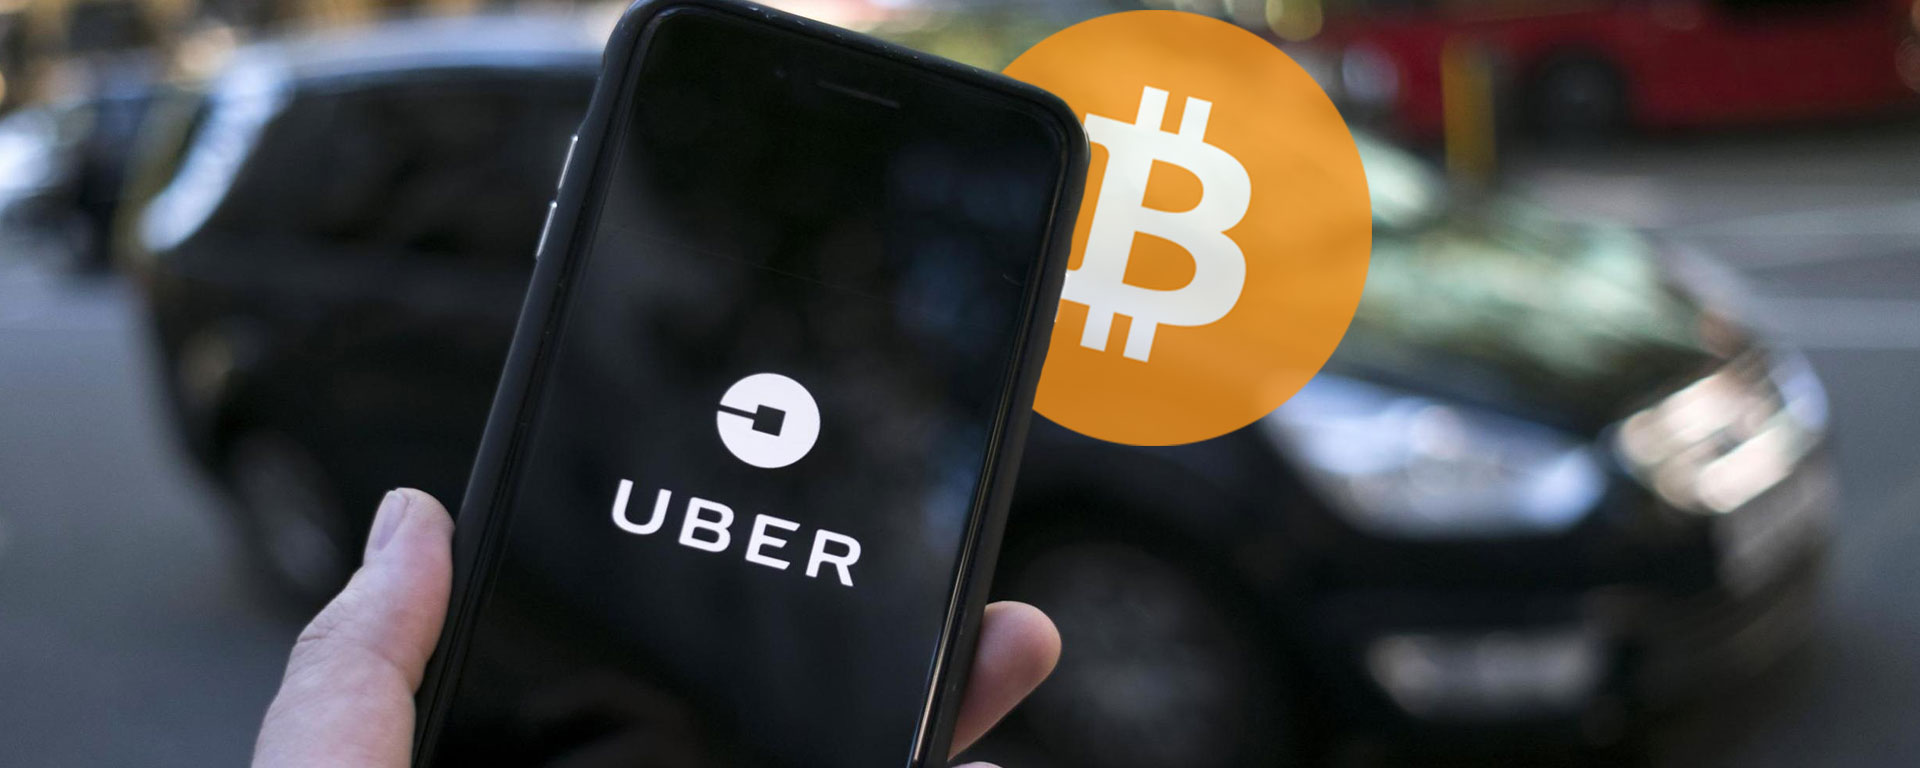 buy uber with bitcoin